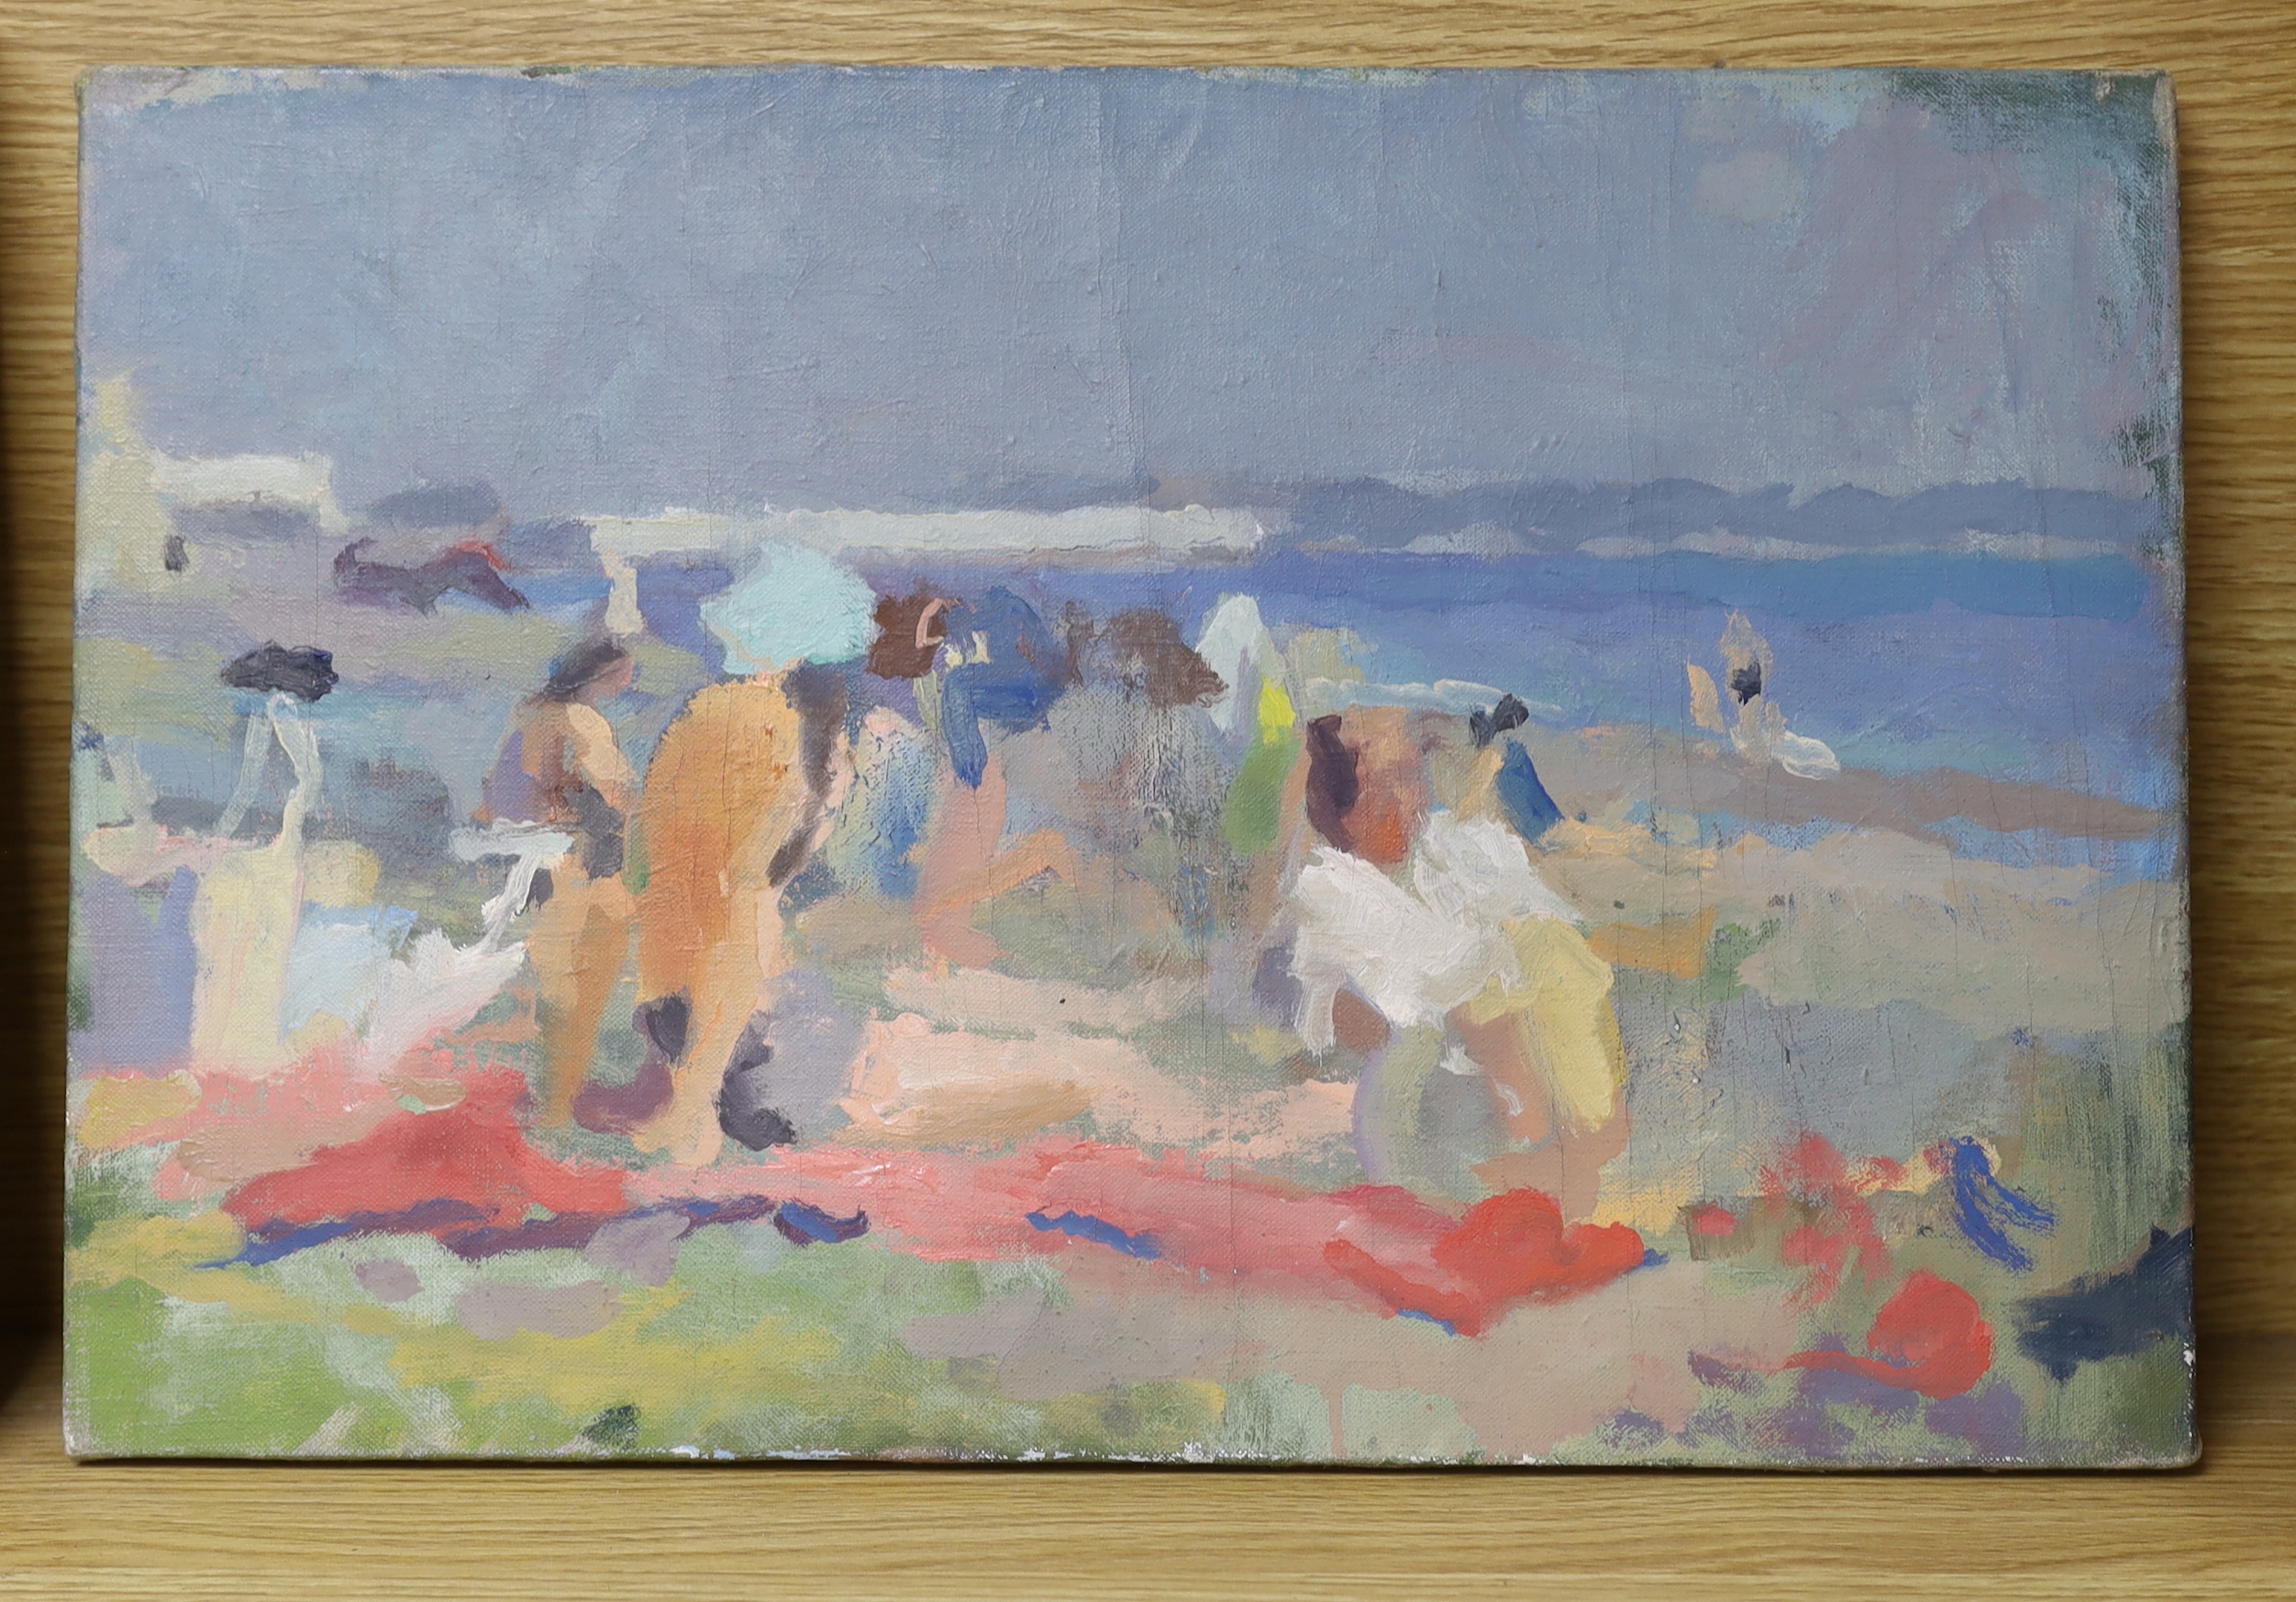 John Harvey (b.1935), oil on canvas, Figures on the beach, artist stamp verso, 30 x 46cm, unframed